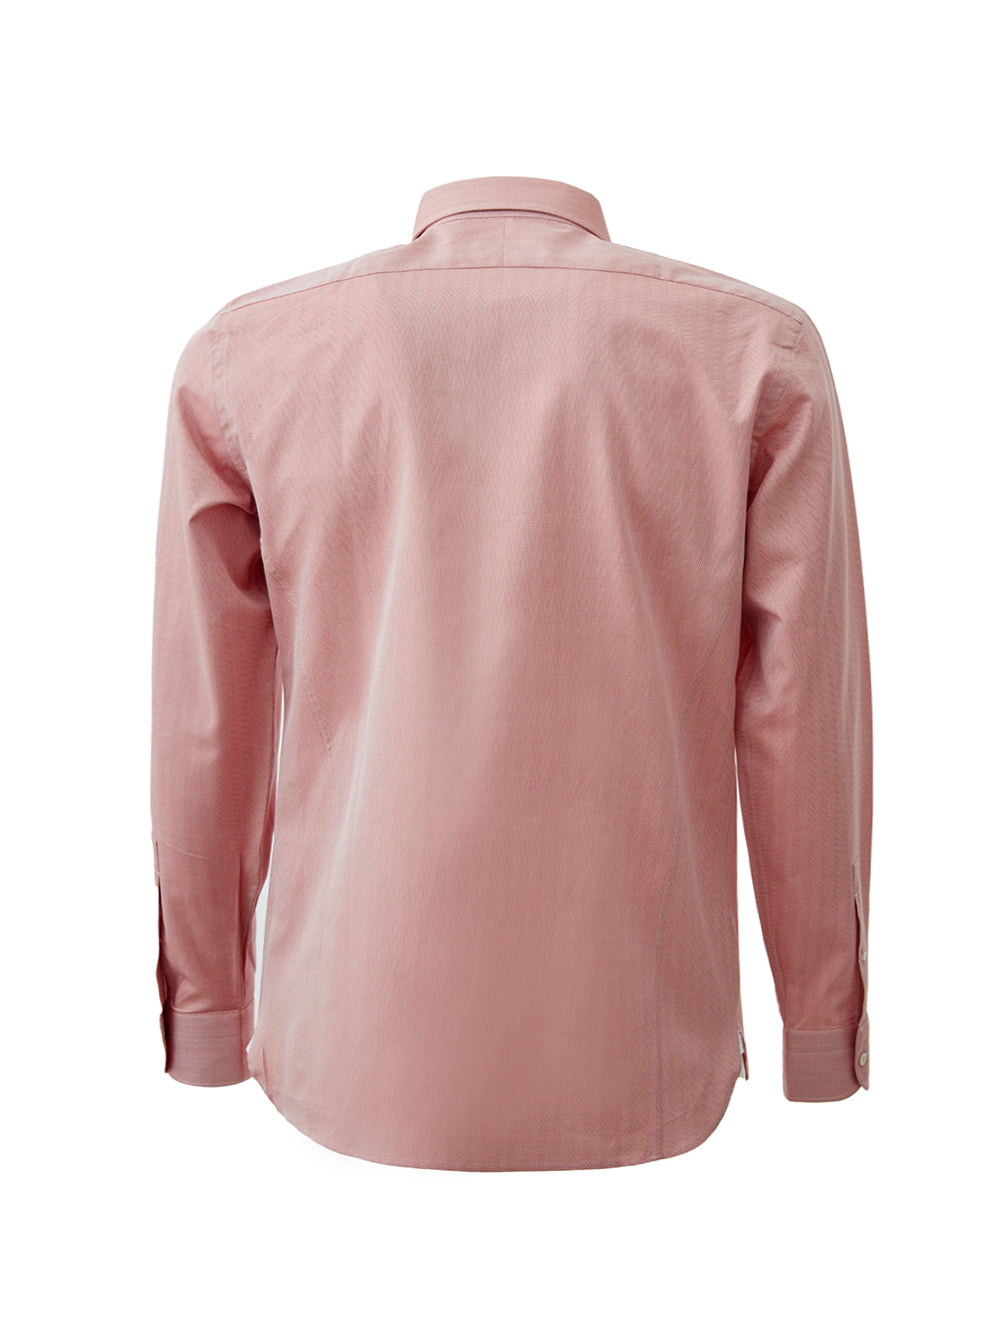 Tom Ford Pink Shirt